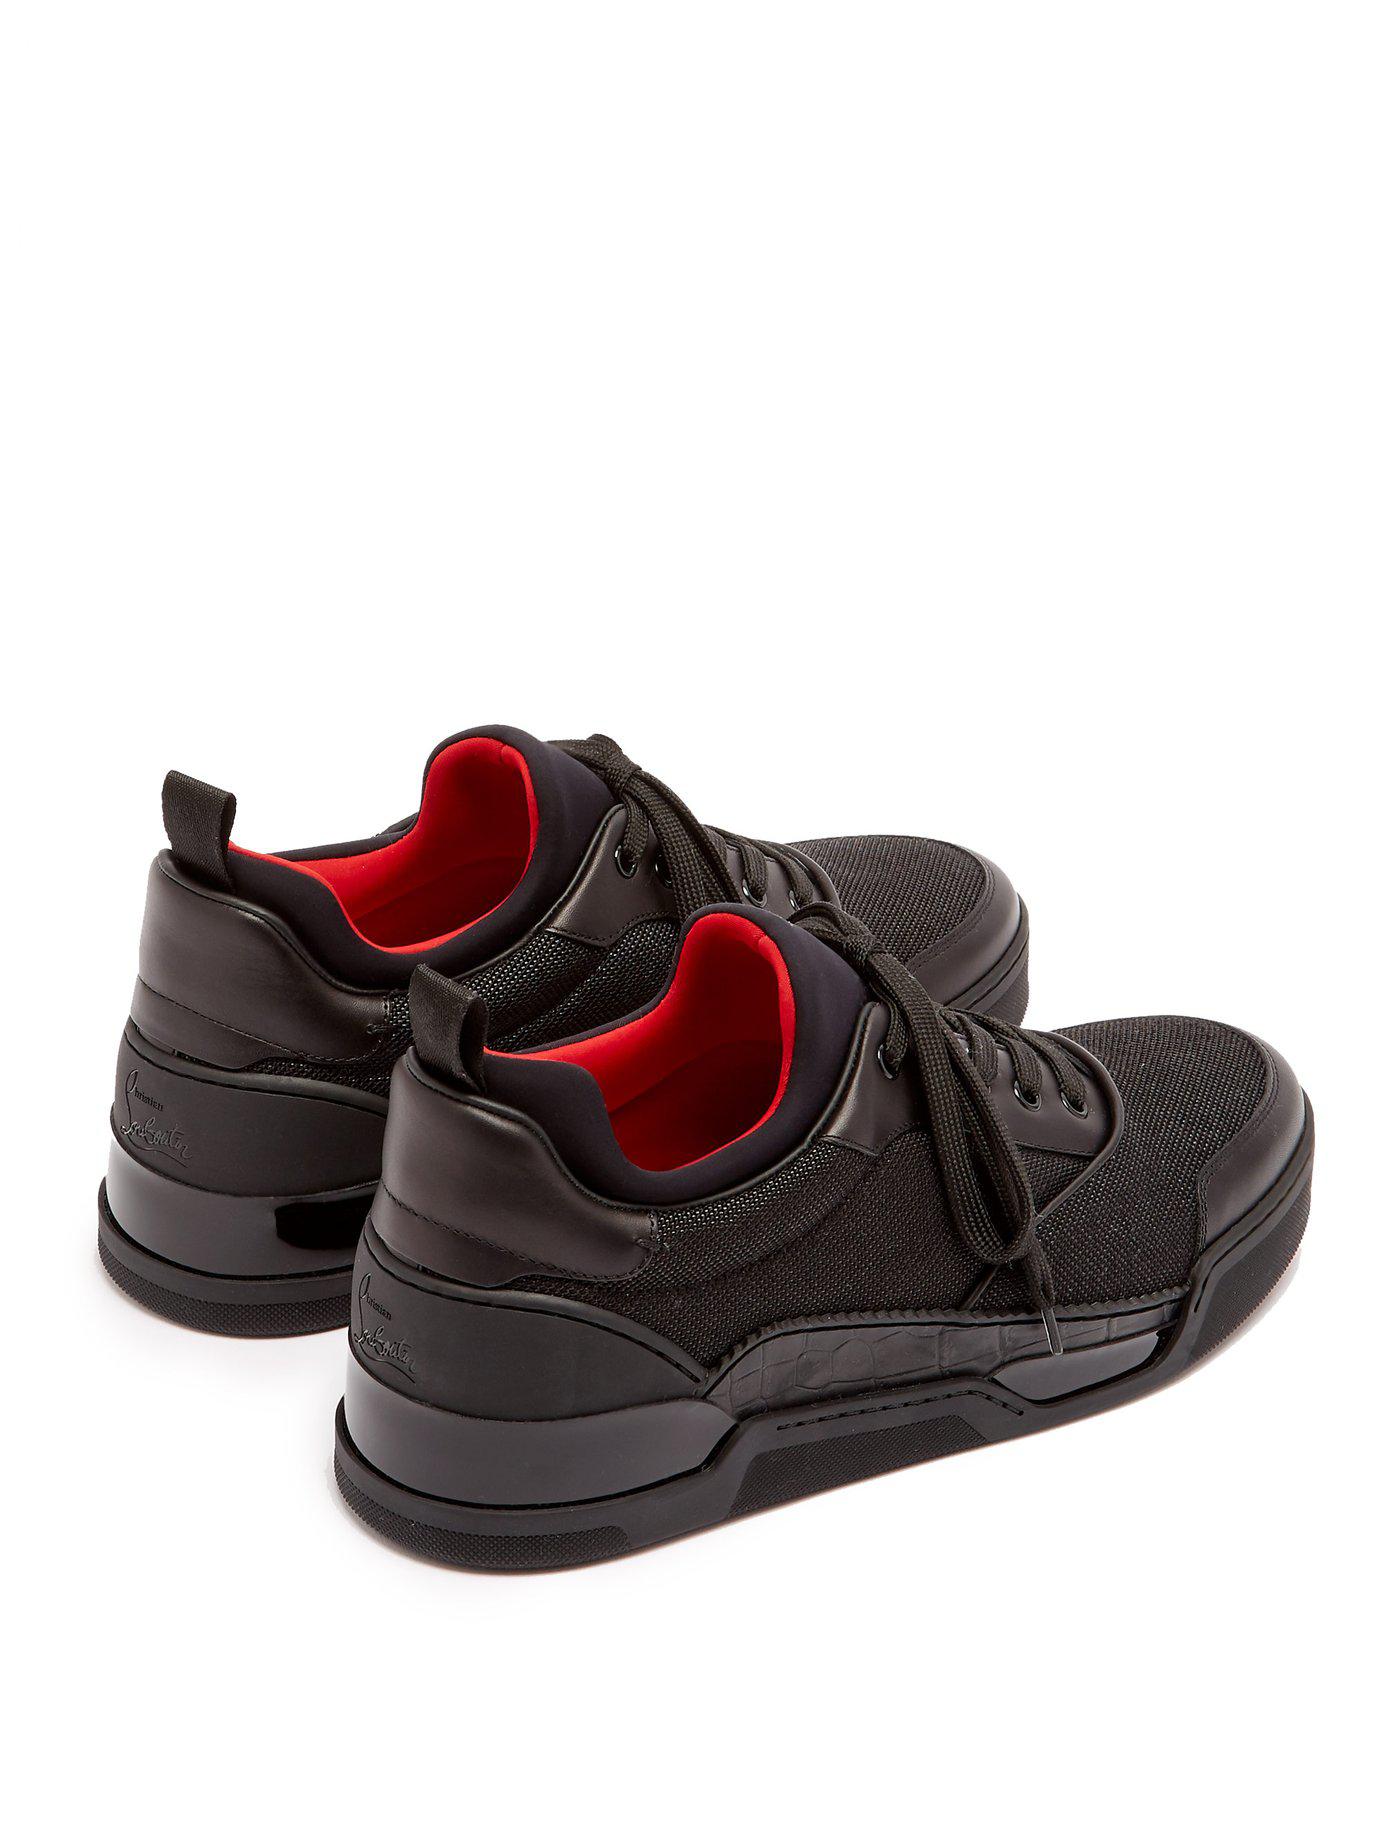 Christian Louboutin Aurelien Flat Sneaker Black 45 / 12 US RARE!!! 3190182